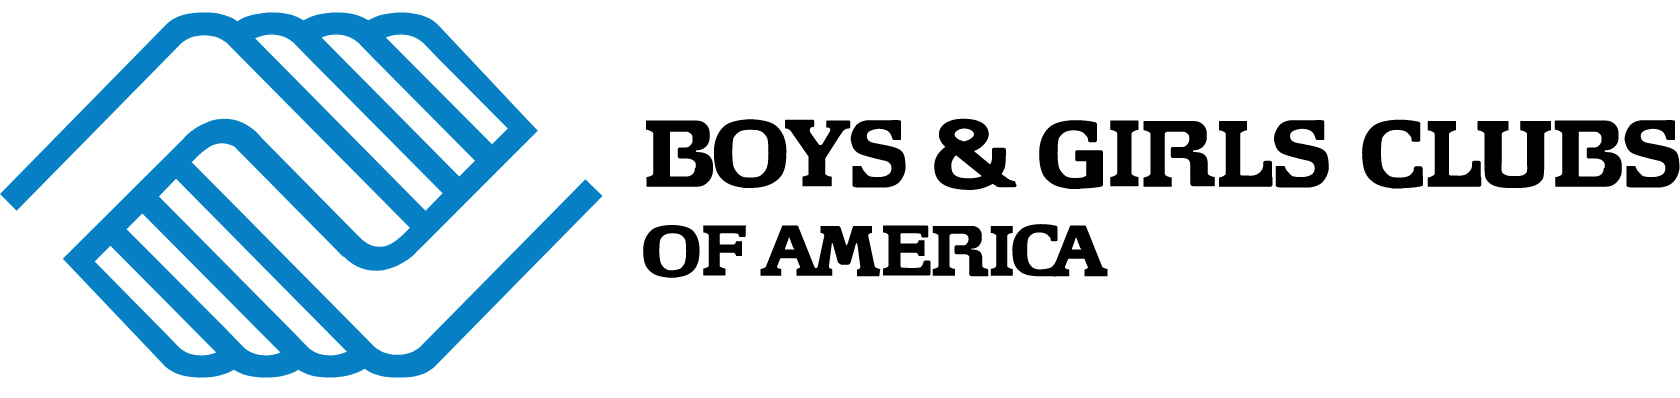 Boys & Girls of America logo